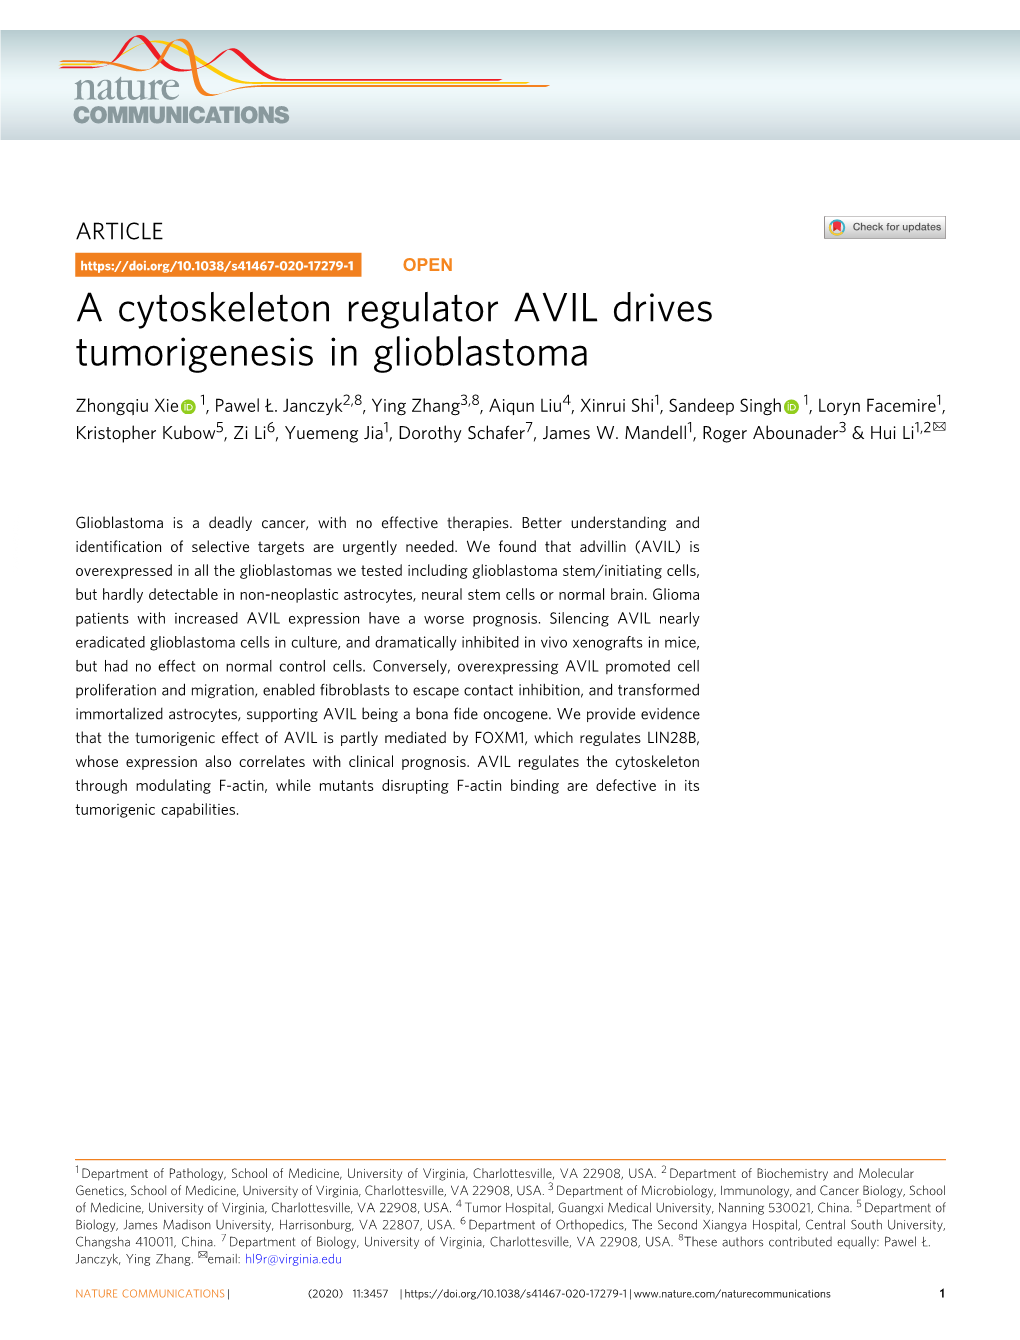 A Cytoskeleton Regulator AVIL Drives Tumorigenesis in Glioblastoma